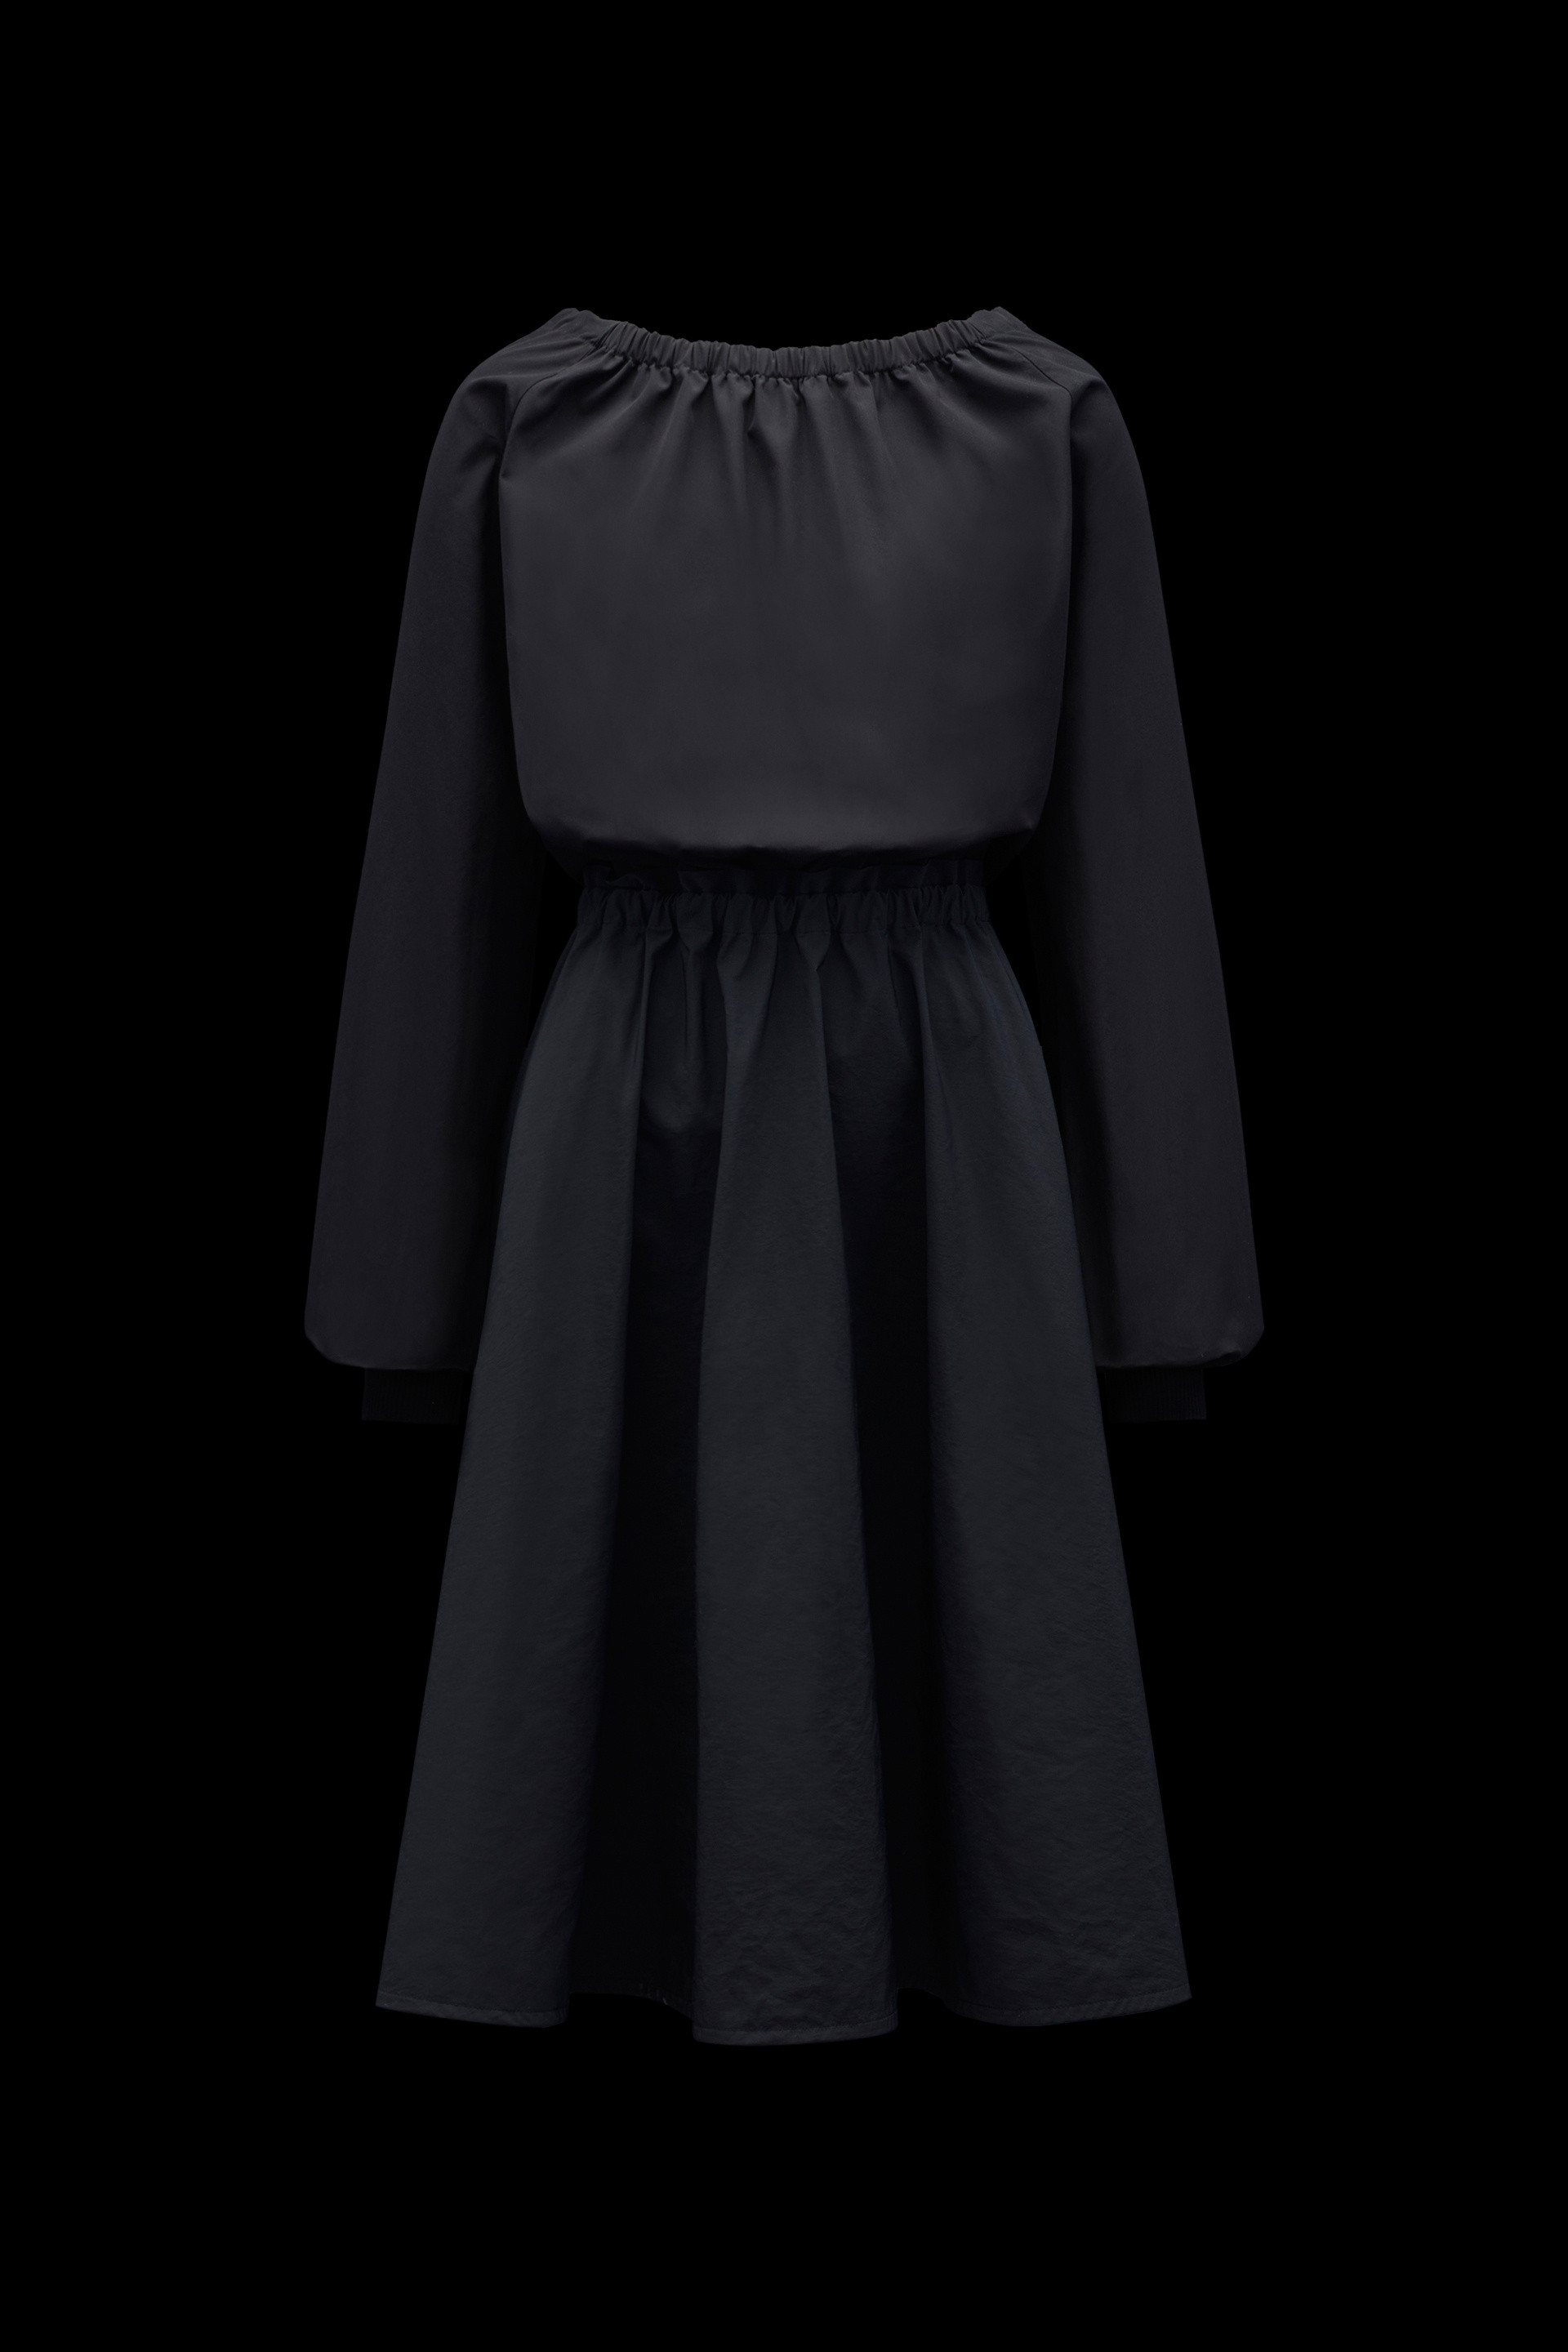 Dresses for Women - White, Black & Maxi Dresses | Moncler US